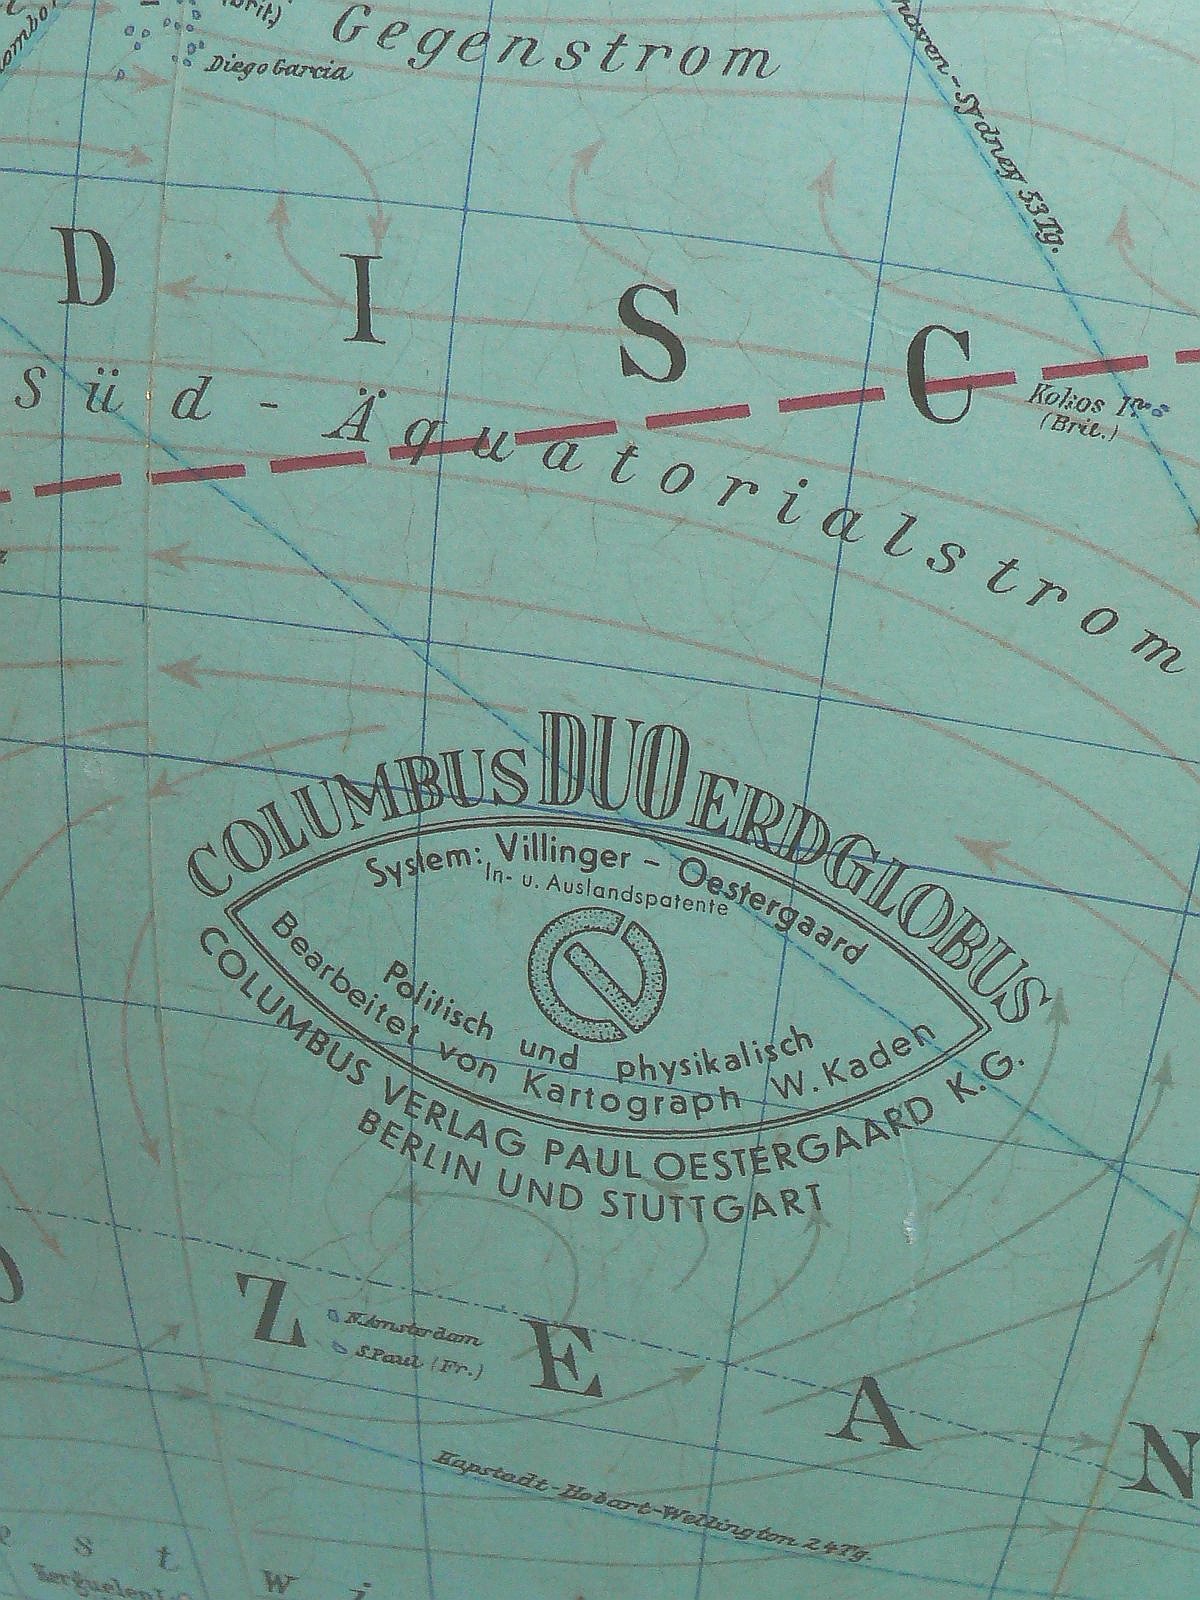 Erdglobus, terrestrial globe, Columbus